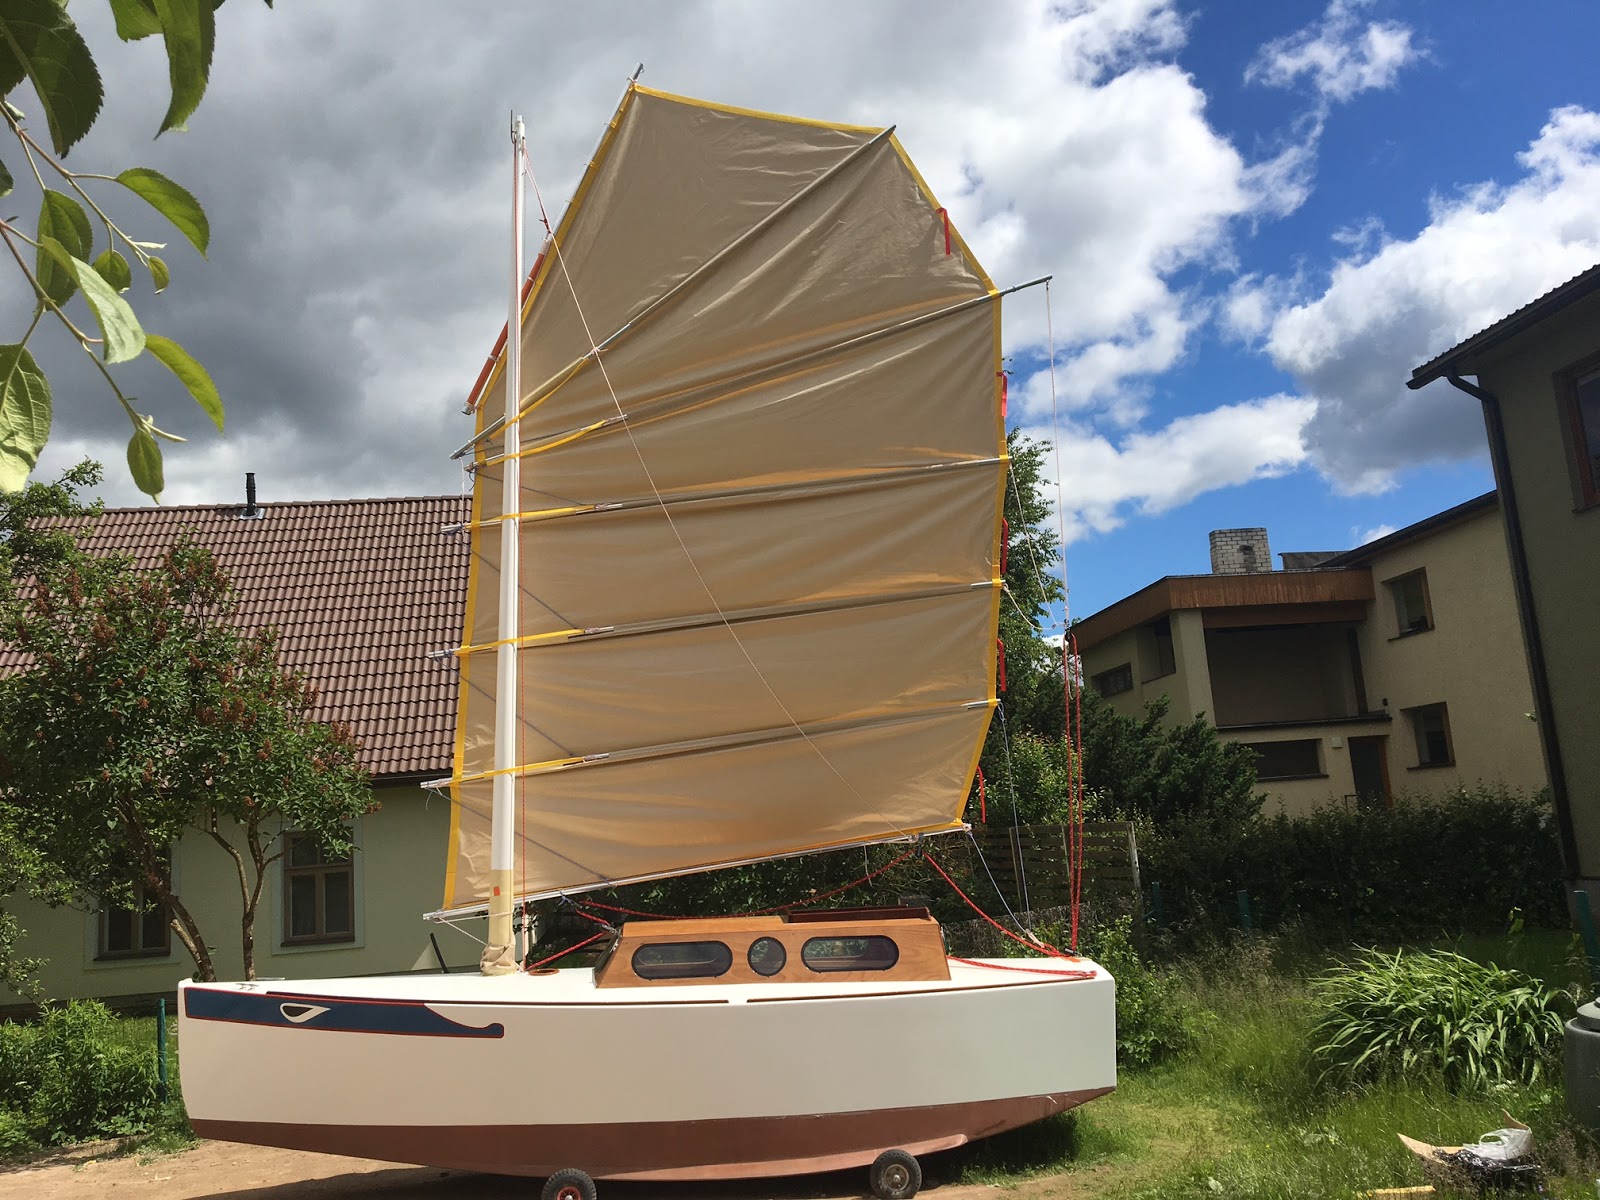 building a paradox sailboat